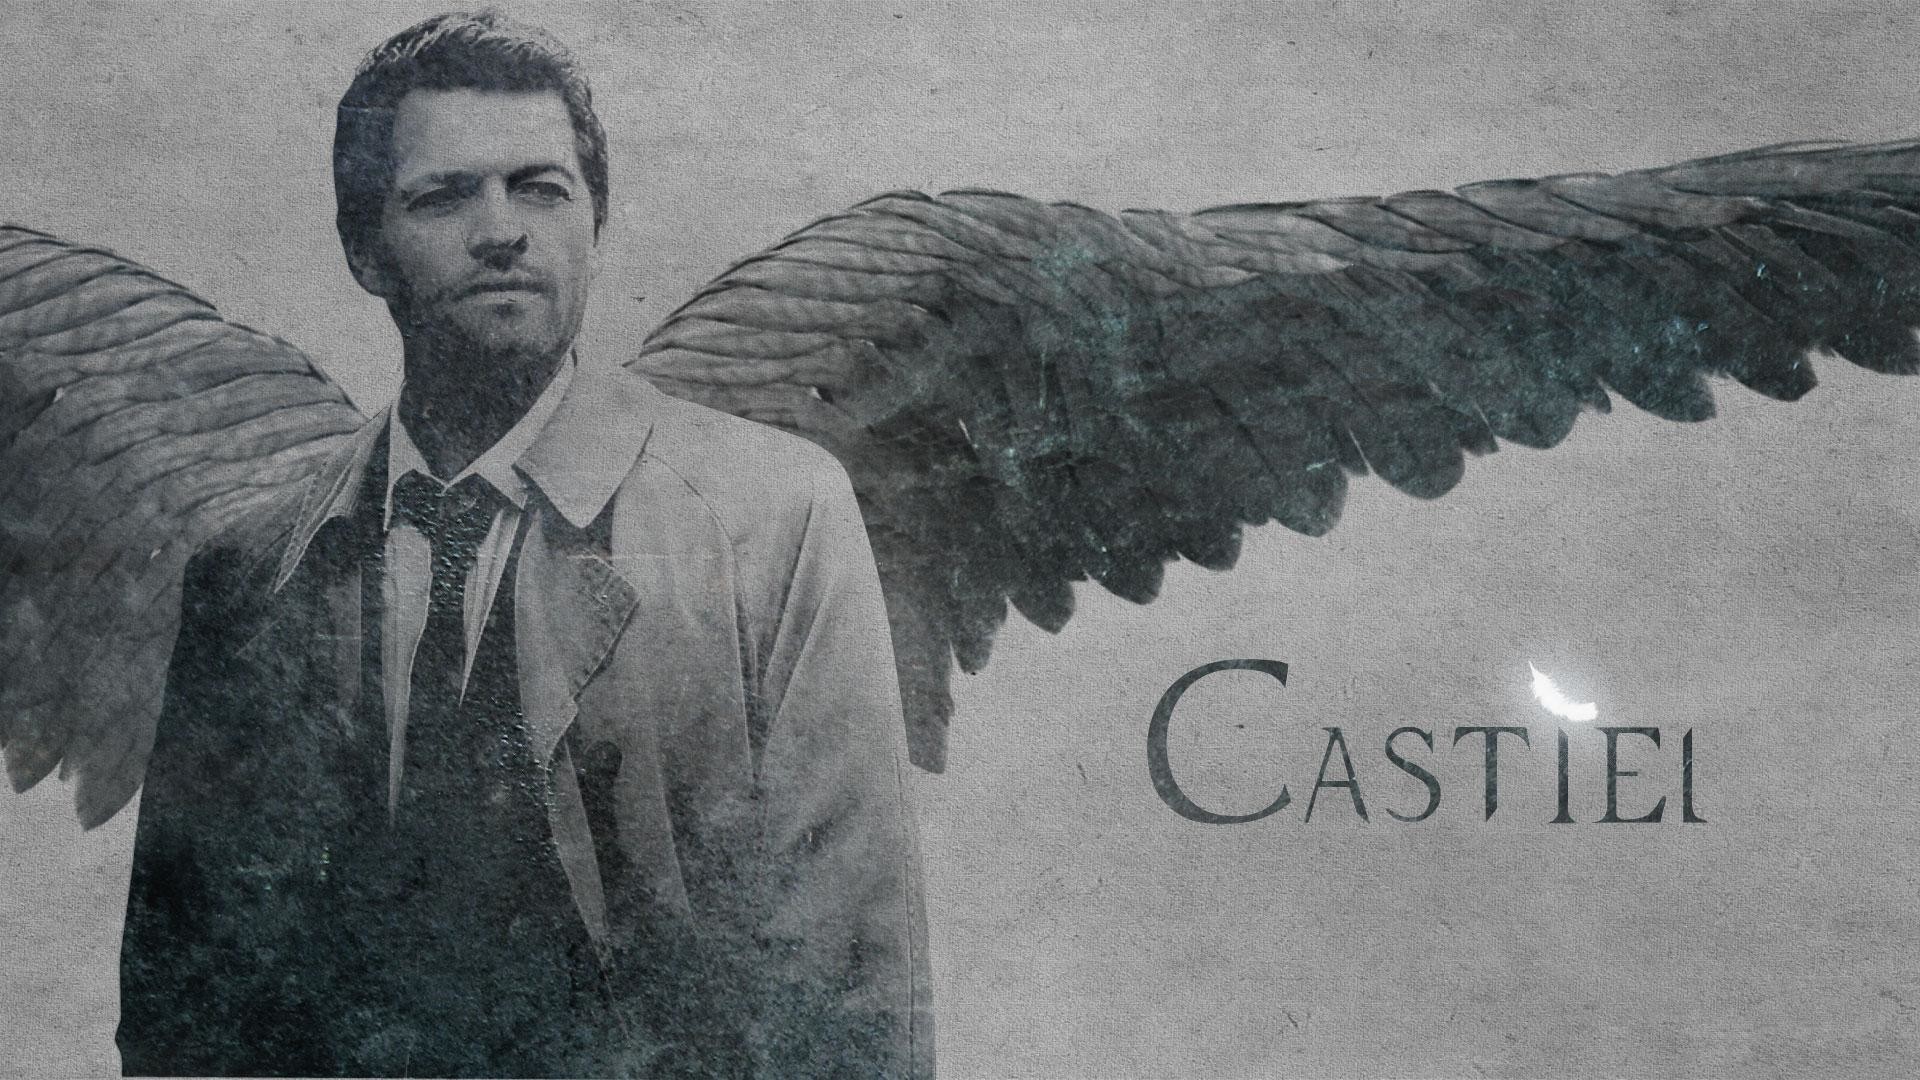 1920x1080 Castiel-Supernatural-Iphone-Image-Download-Free